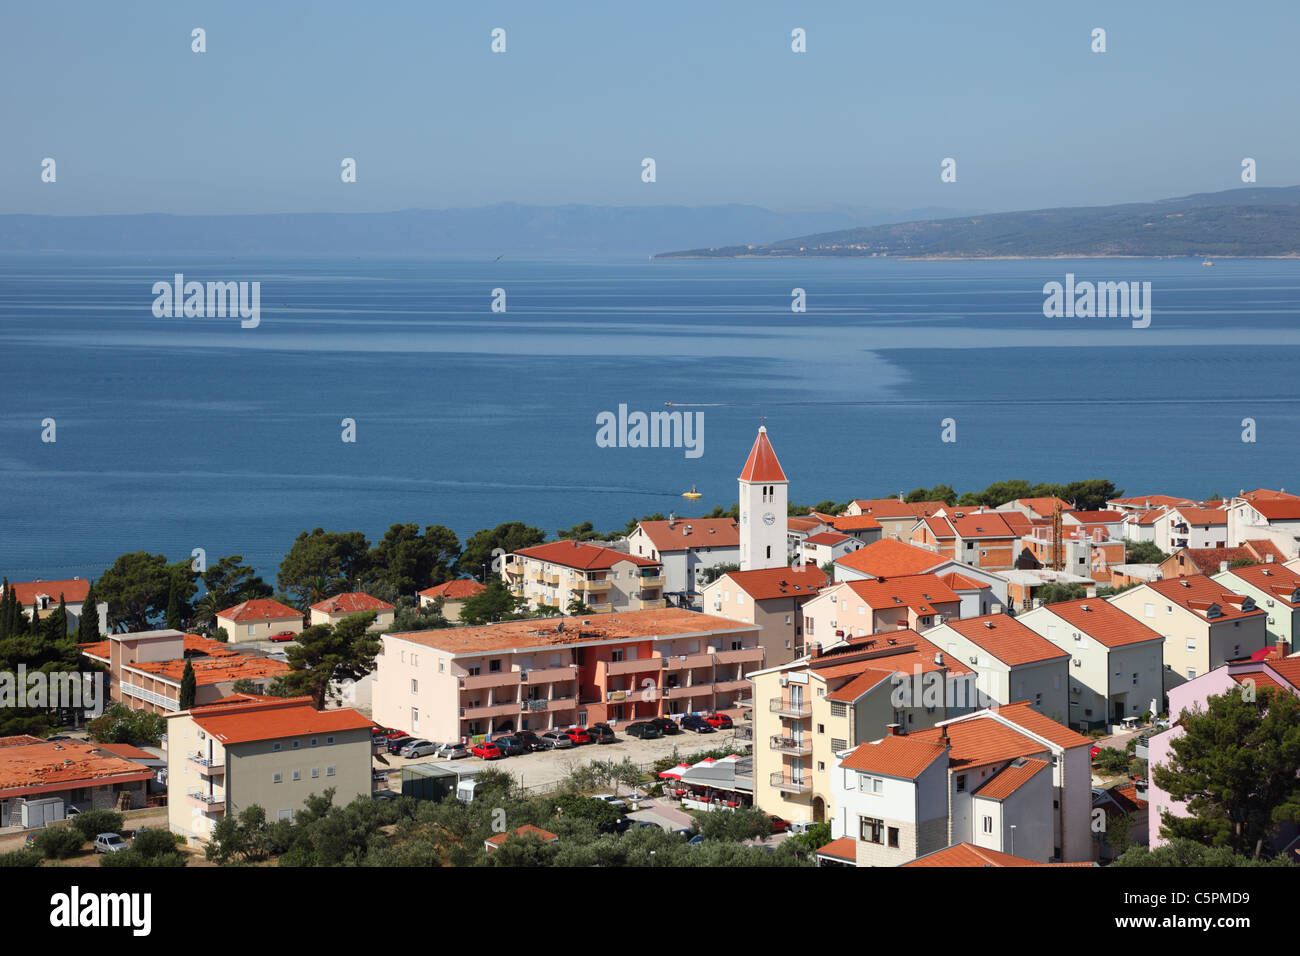 View of Adriatic resort town Promajna, Croatia Stock Photo